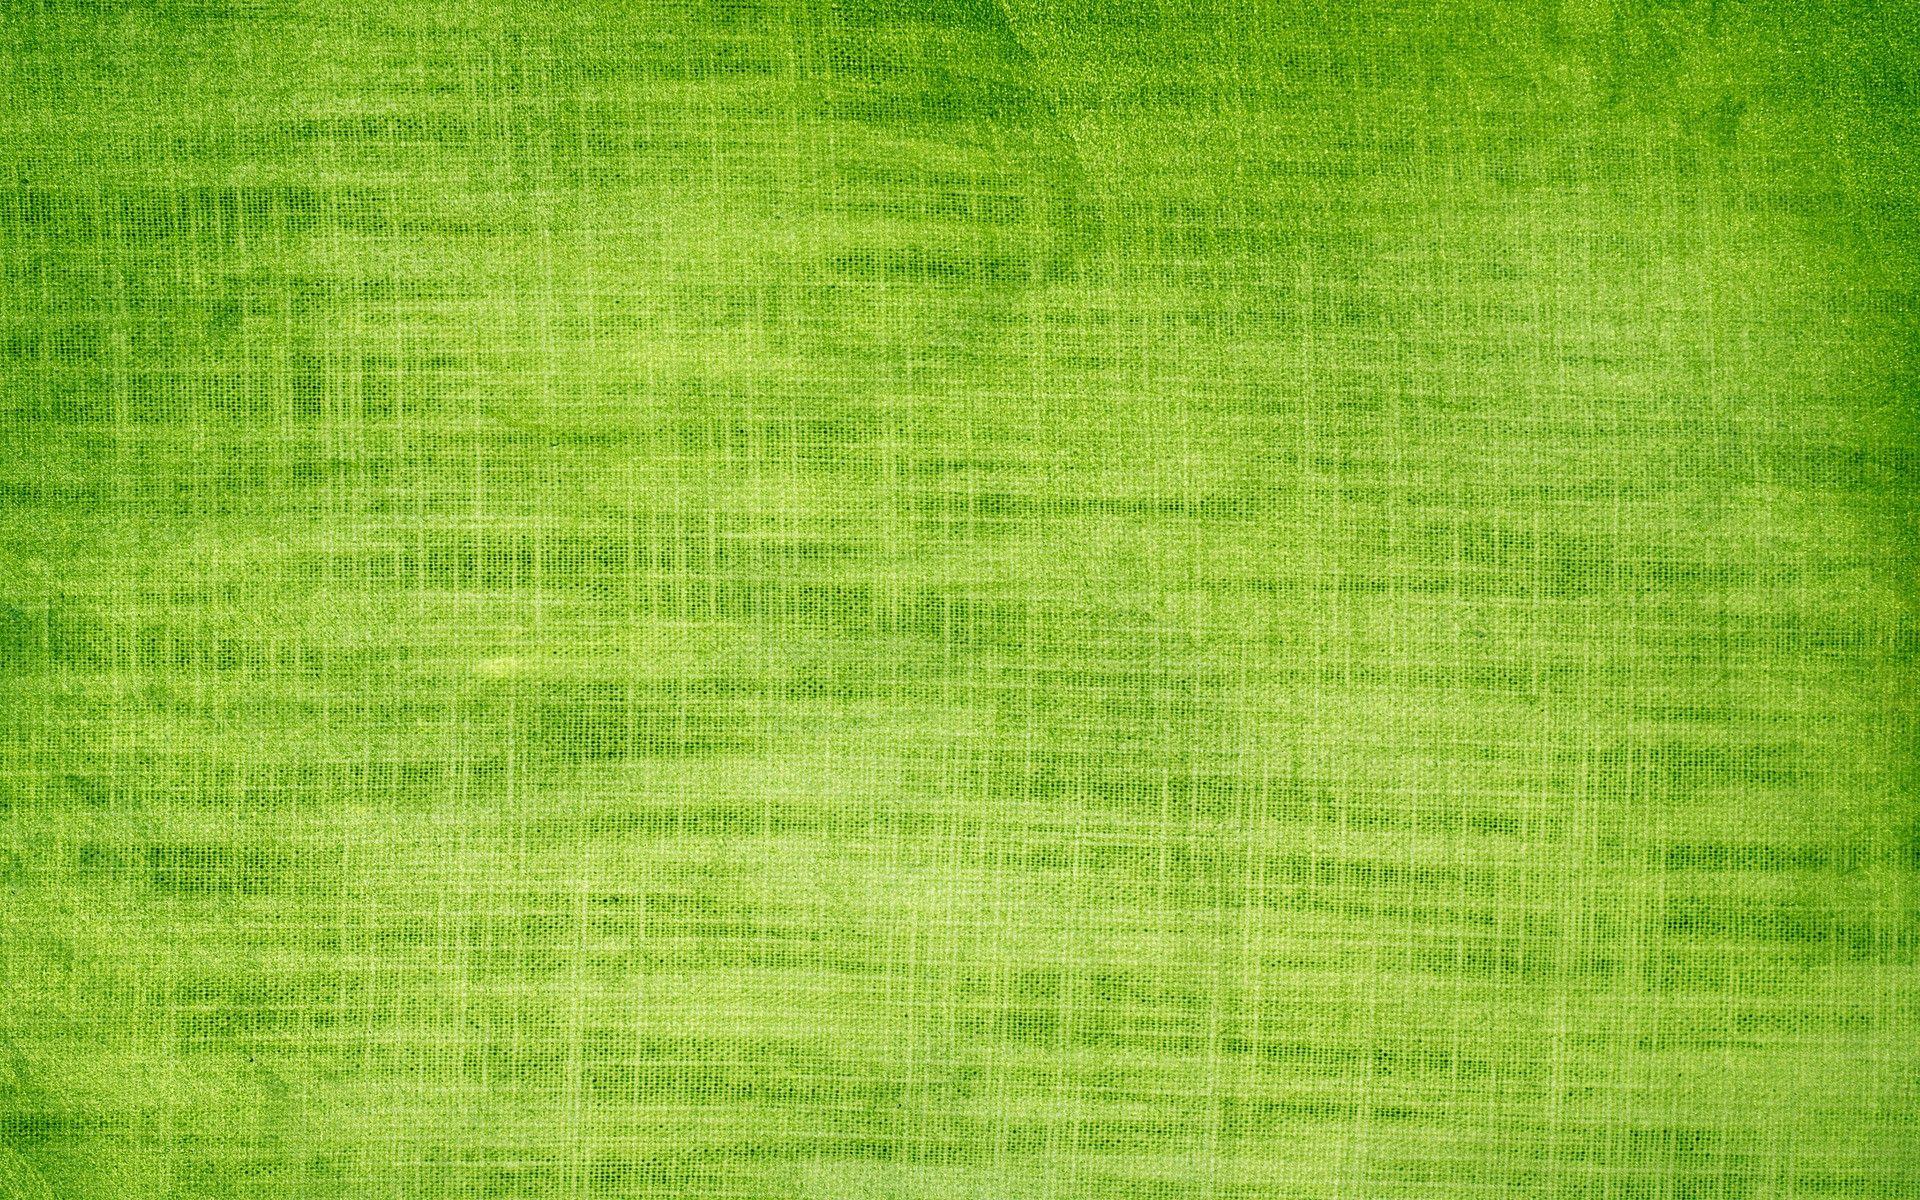 Plain Green Background 19126 1920x1200 px